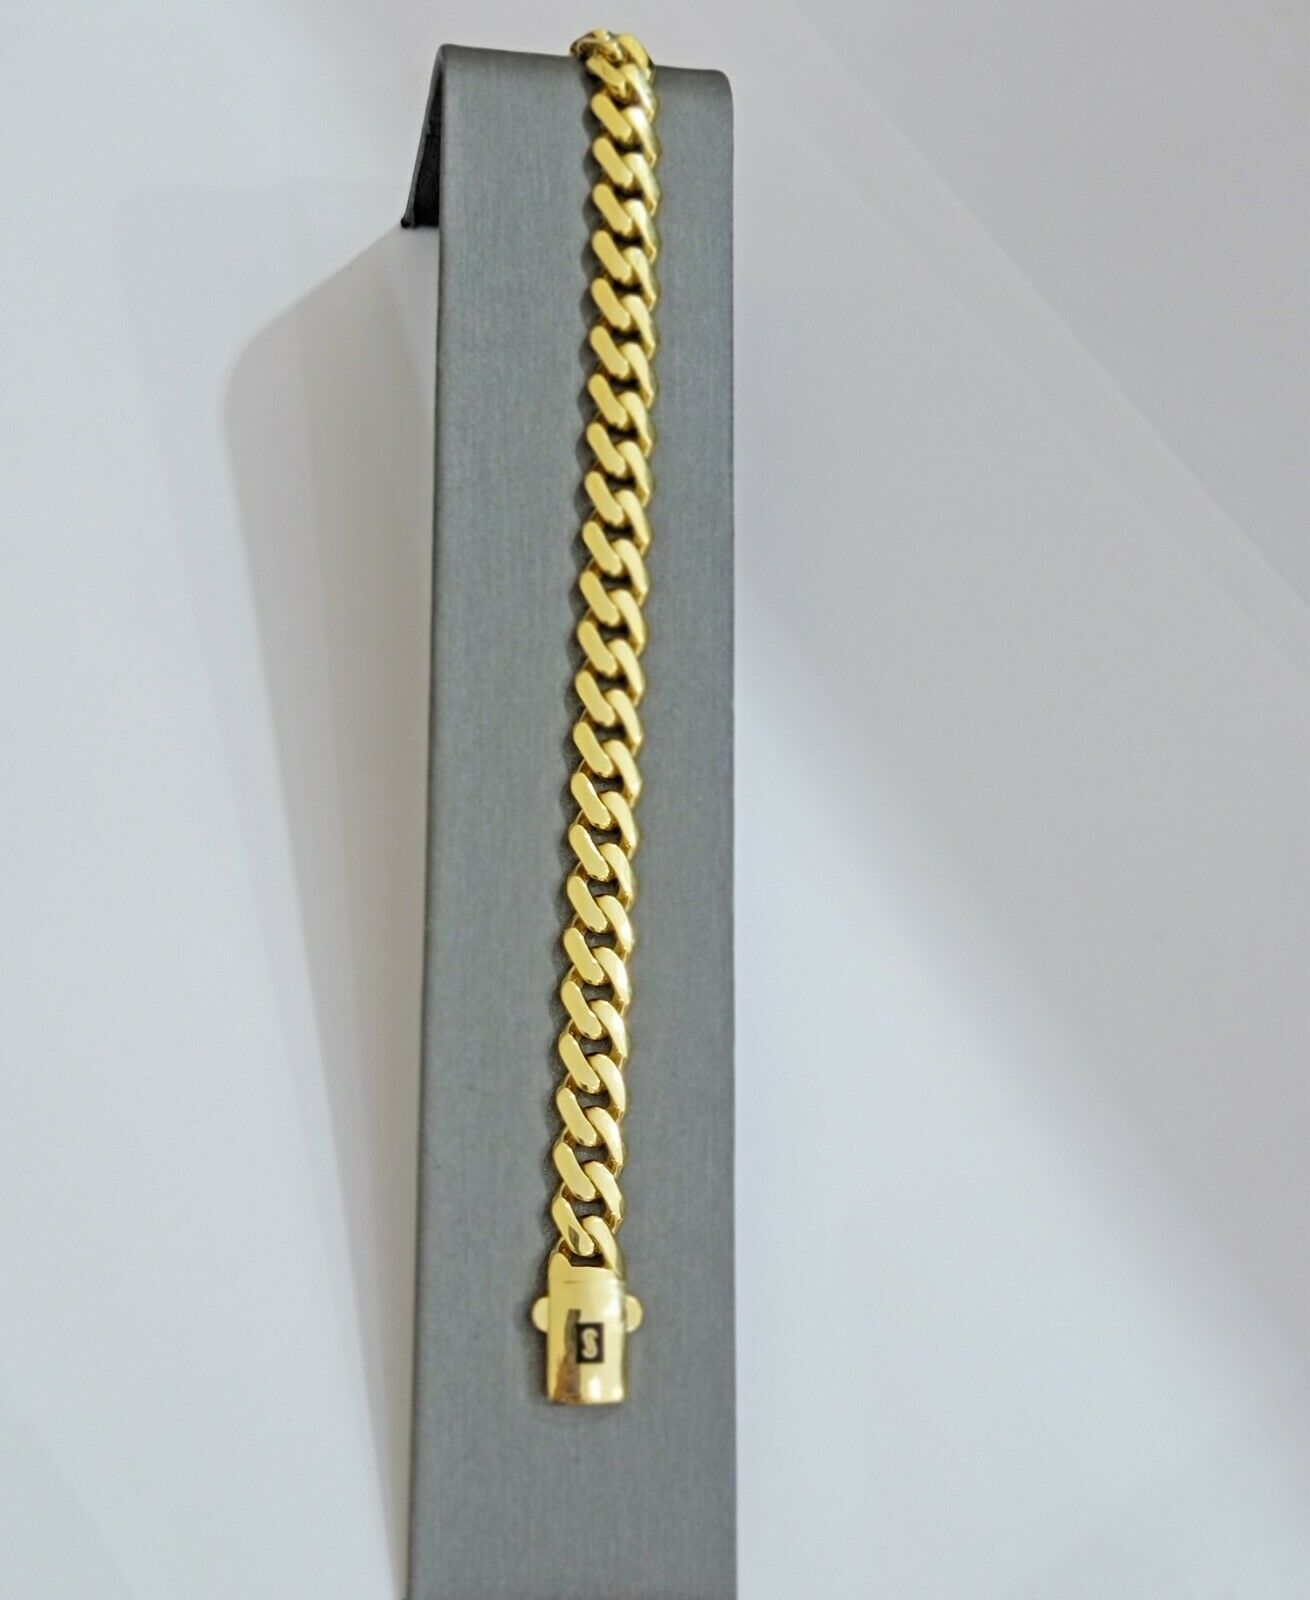 Real 10k Gold Bracelet Royal Miami Cuban Link 8.5mm 8.5Inch Moneco Box Lock,10kt